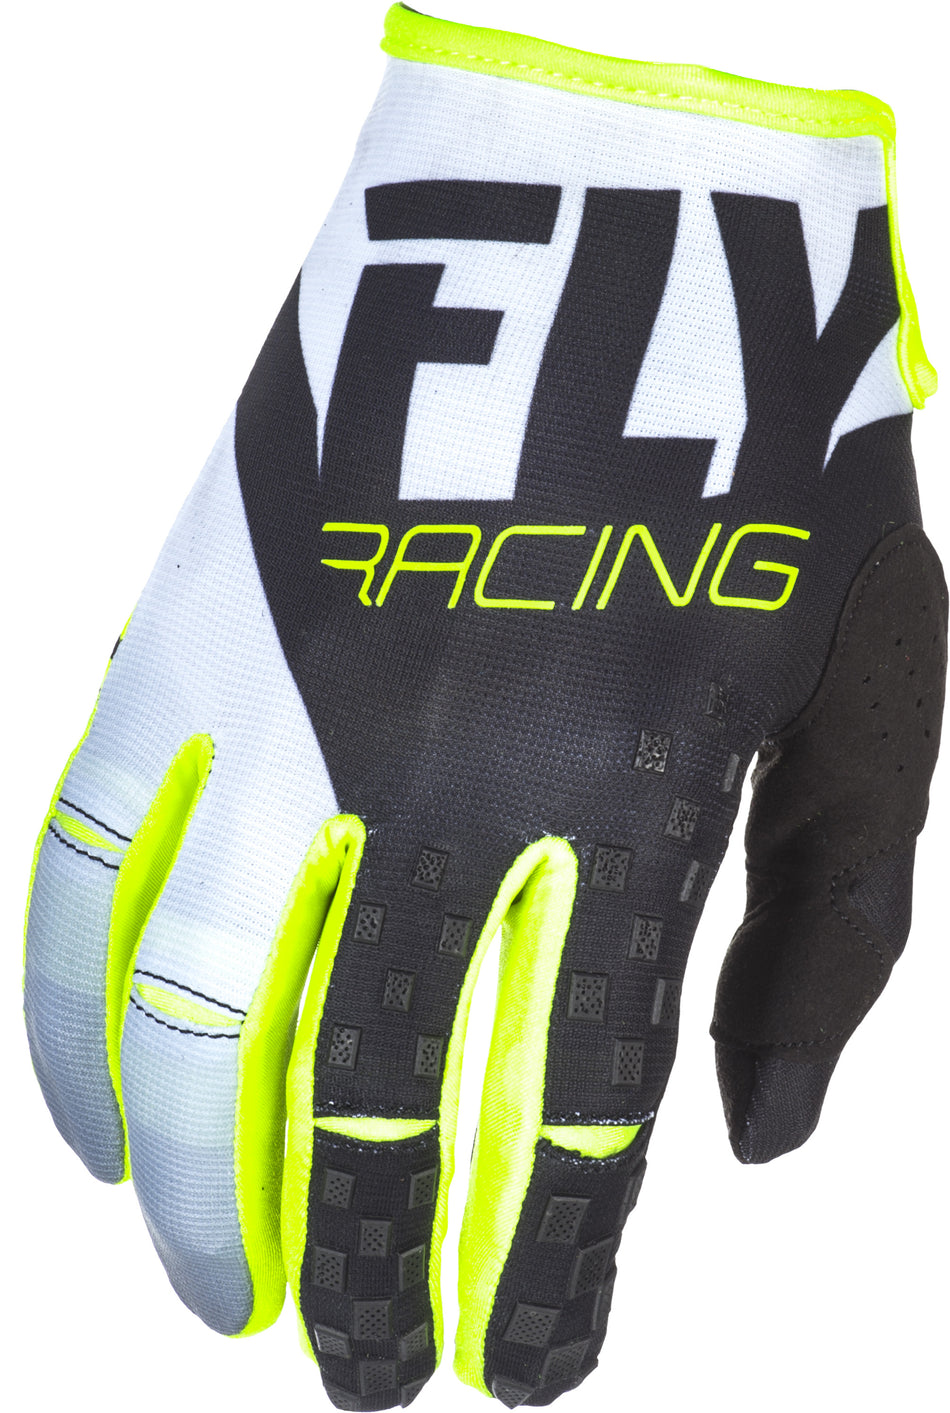 FLY RACING Kinetic Gloves Black/White/Hi-Vis Sz 11 371-41611